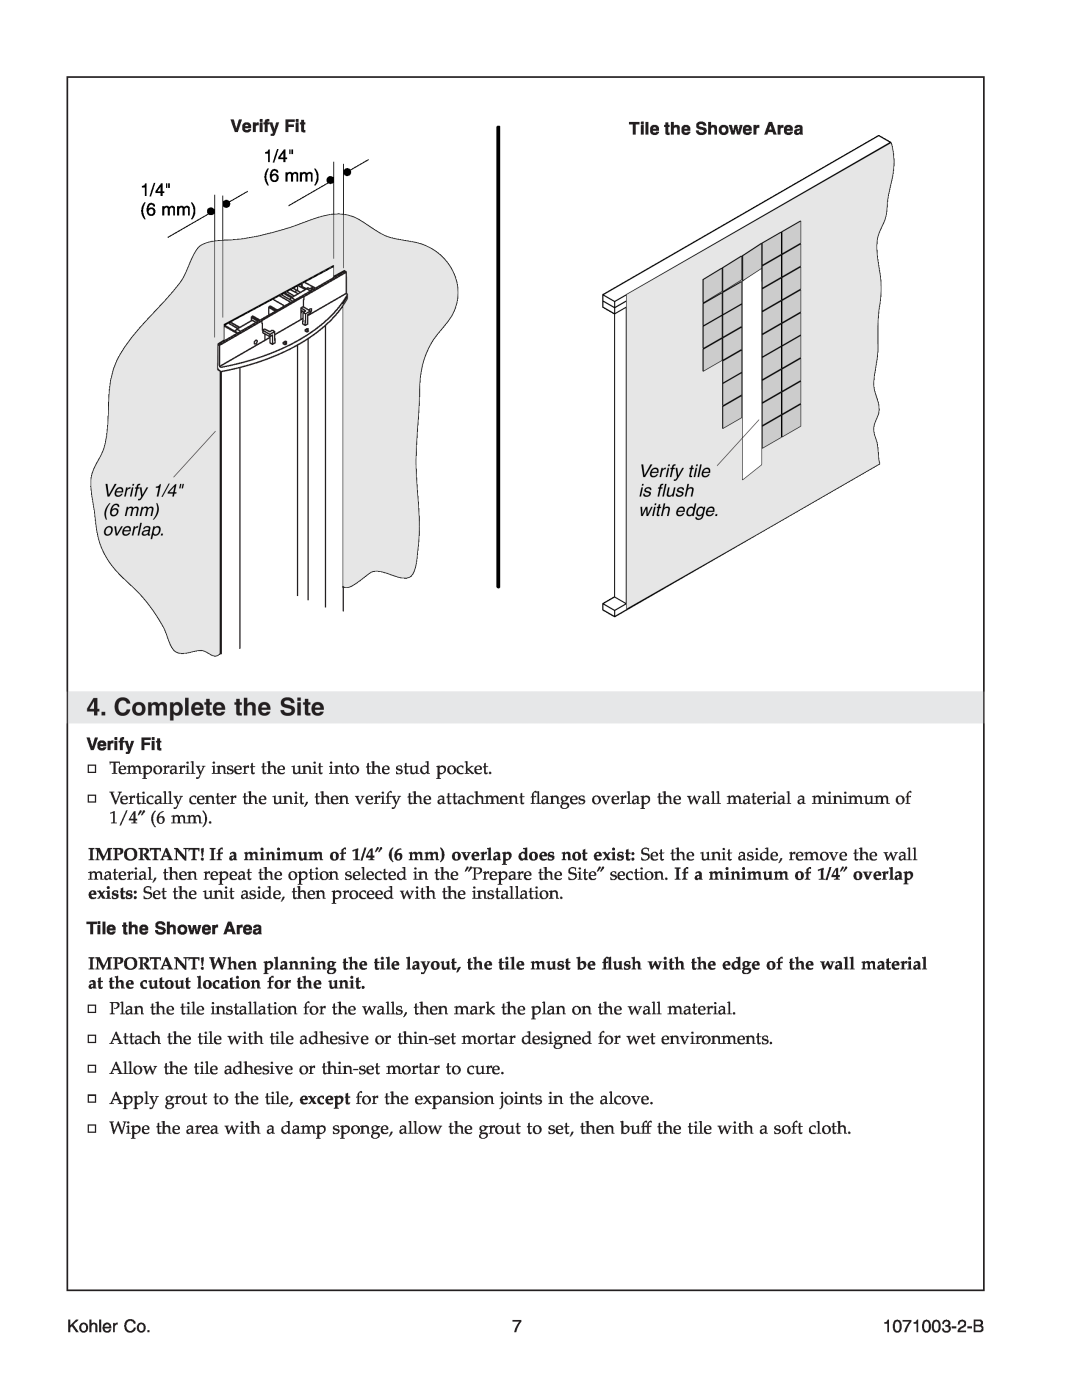 Kohler 1071003-2-B, K-1840 manual Complete the Site, Verify Fit, Tile the Shower Area, Verify 1/4 6 mm overlap 